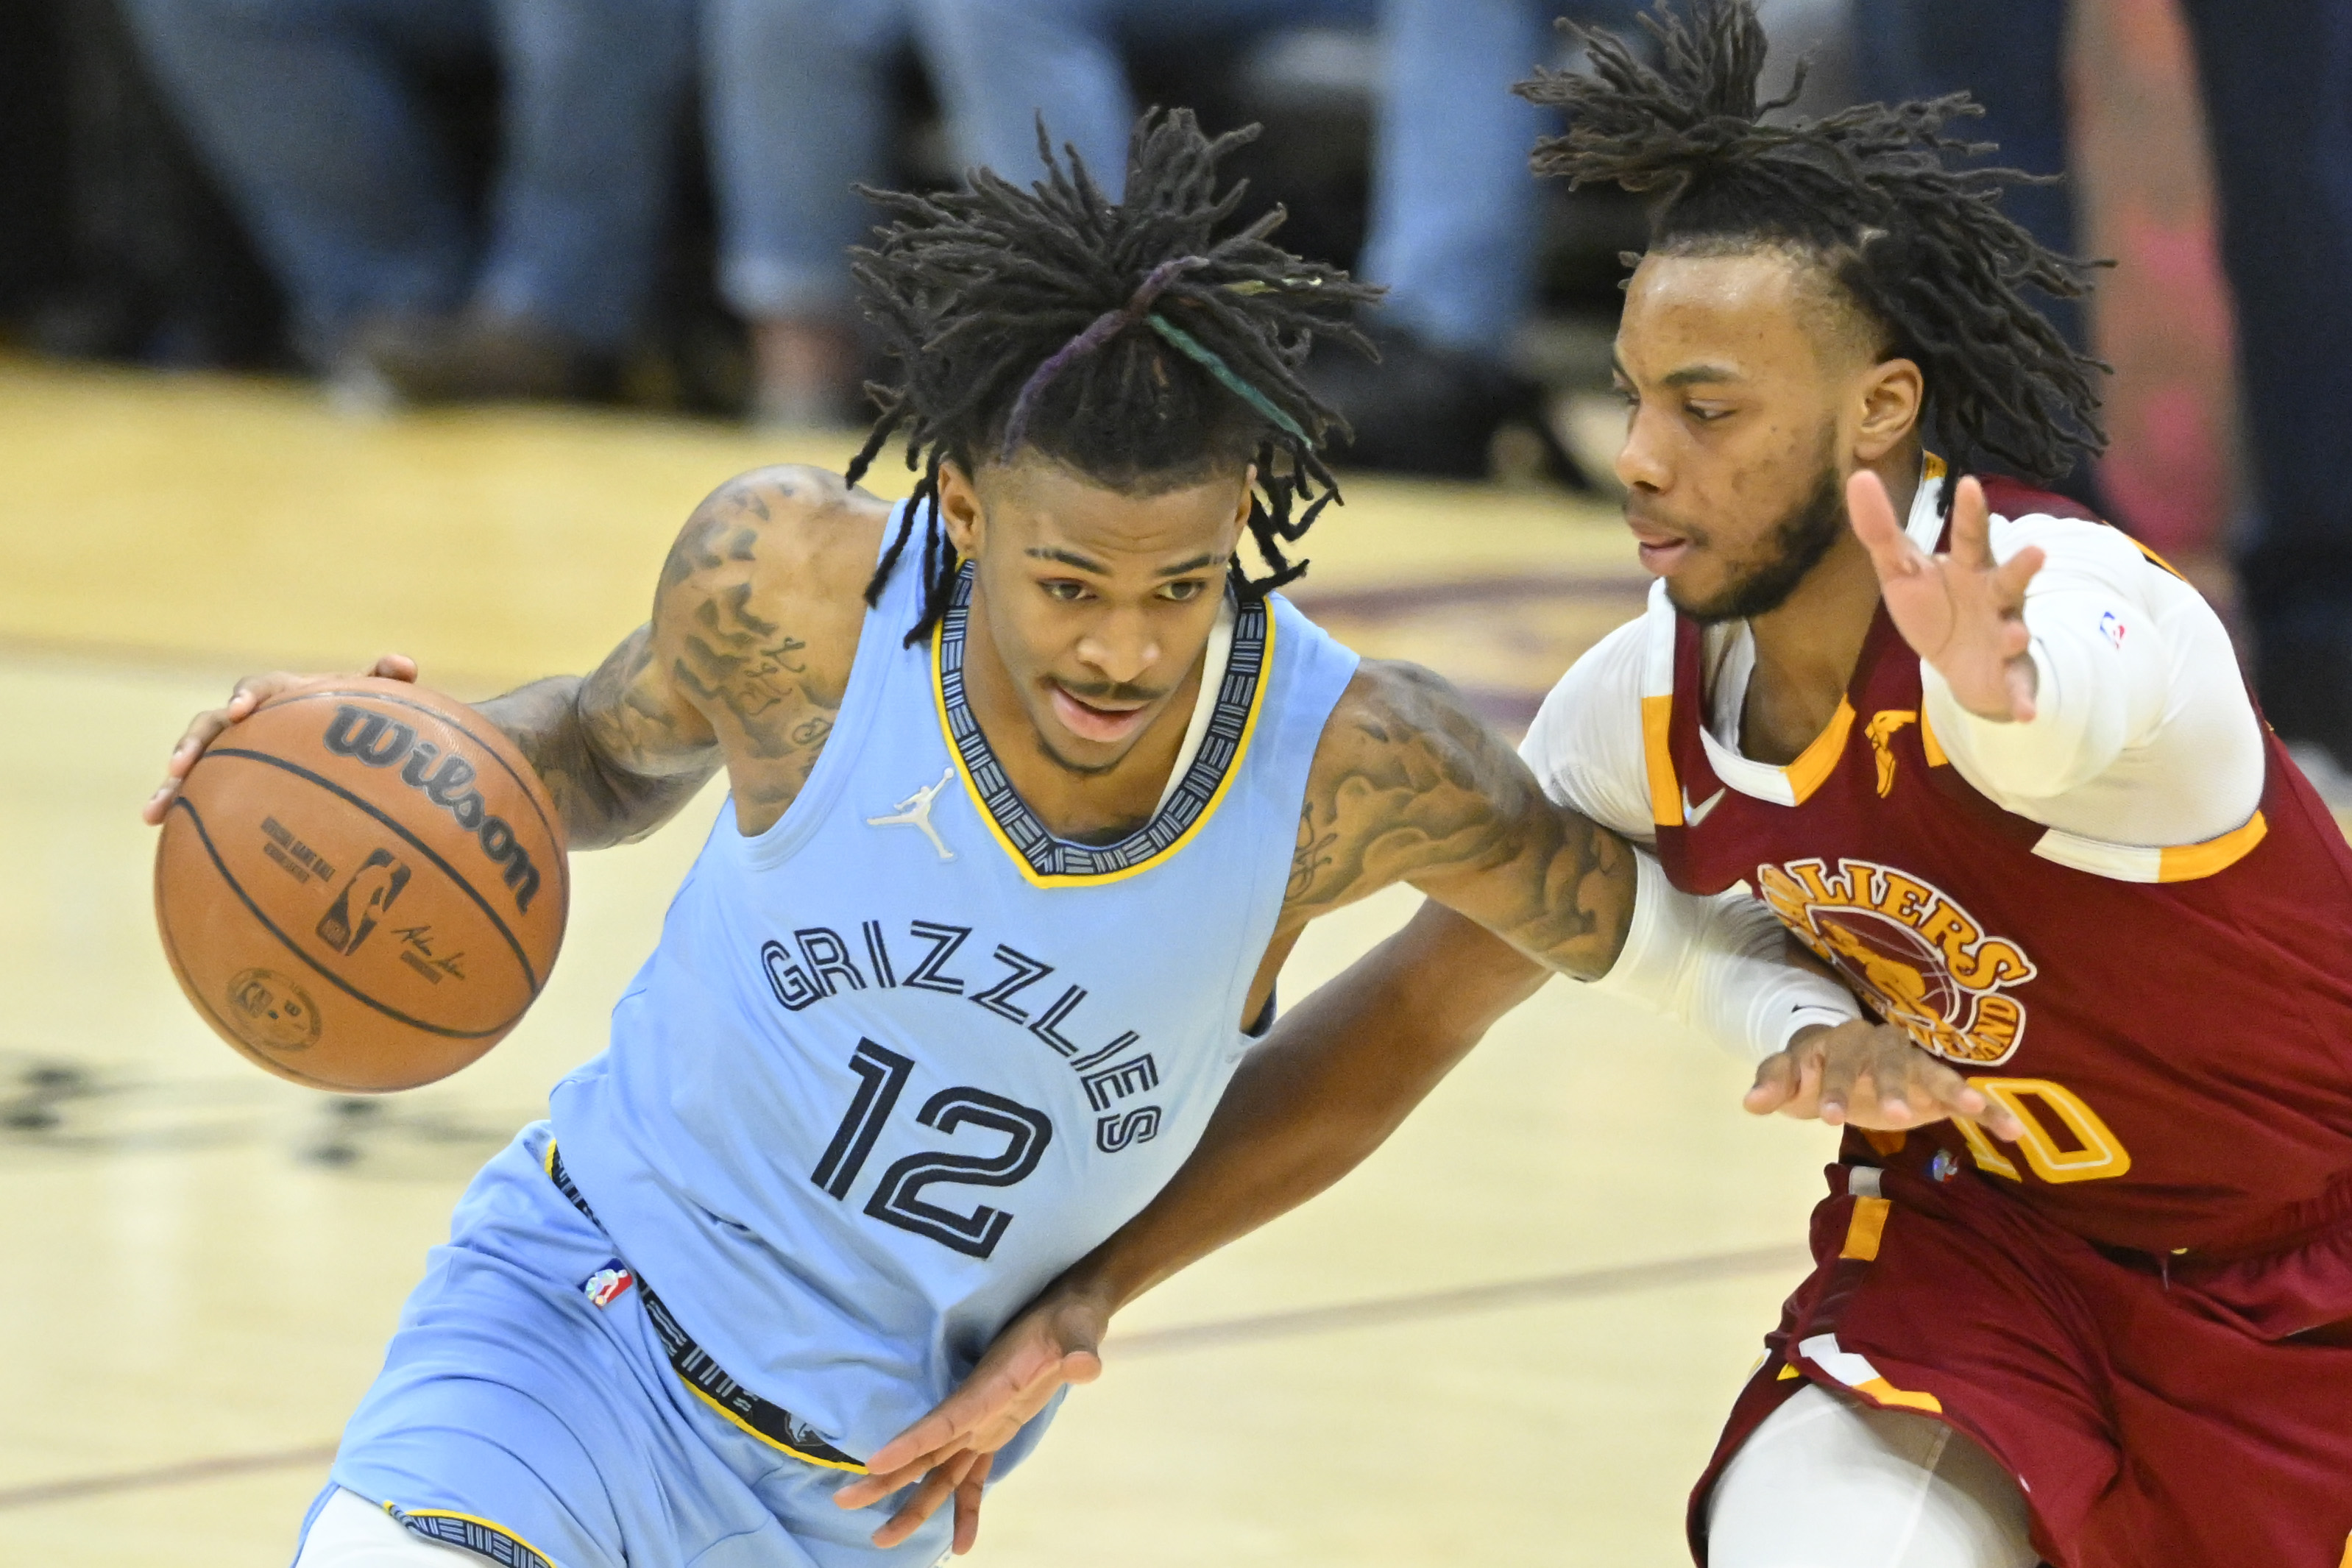 NBA: Memphis Grizzlies at Cleveland Cavaliers